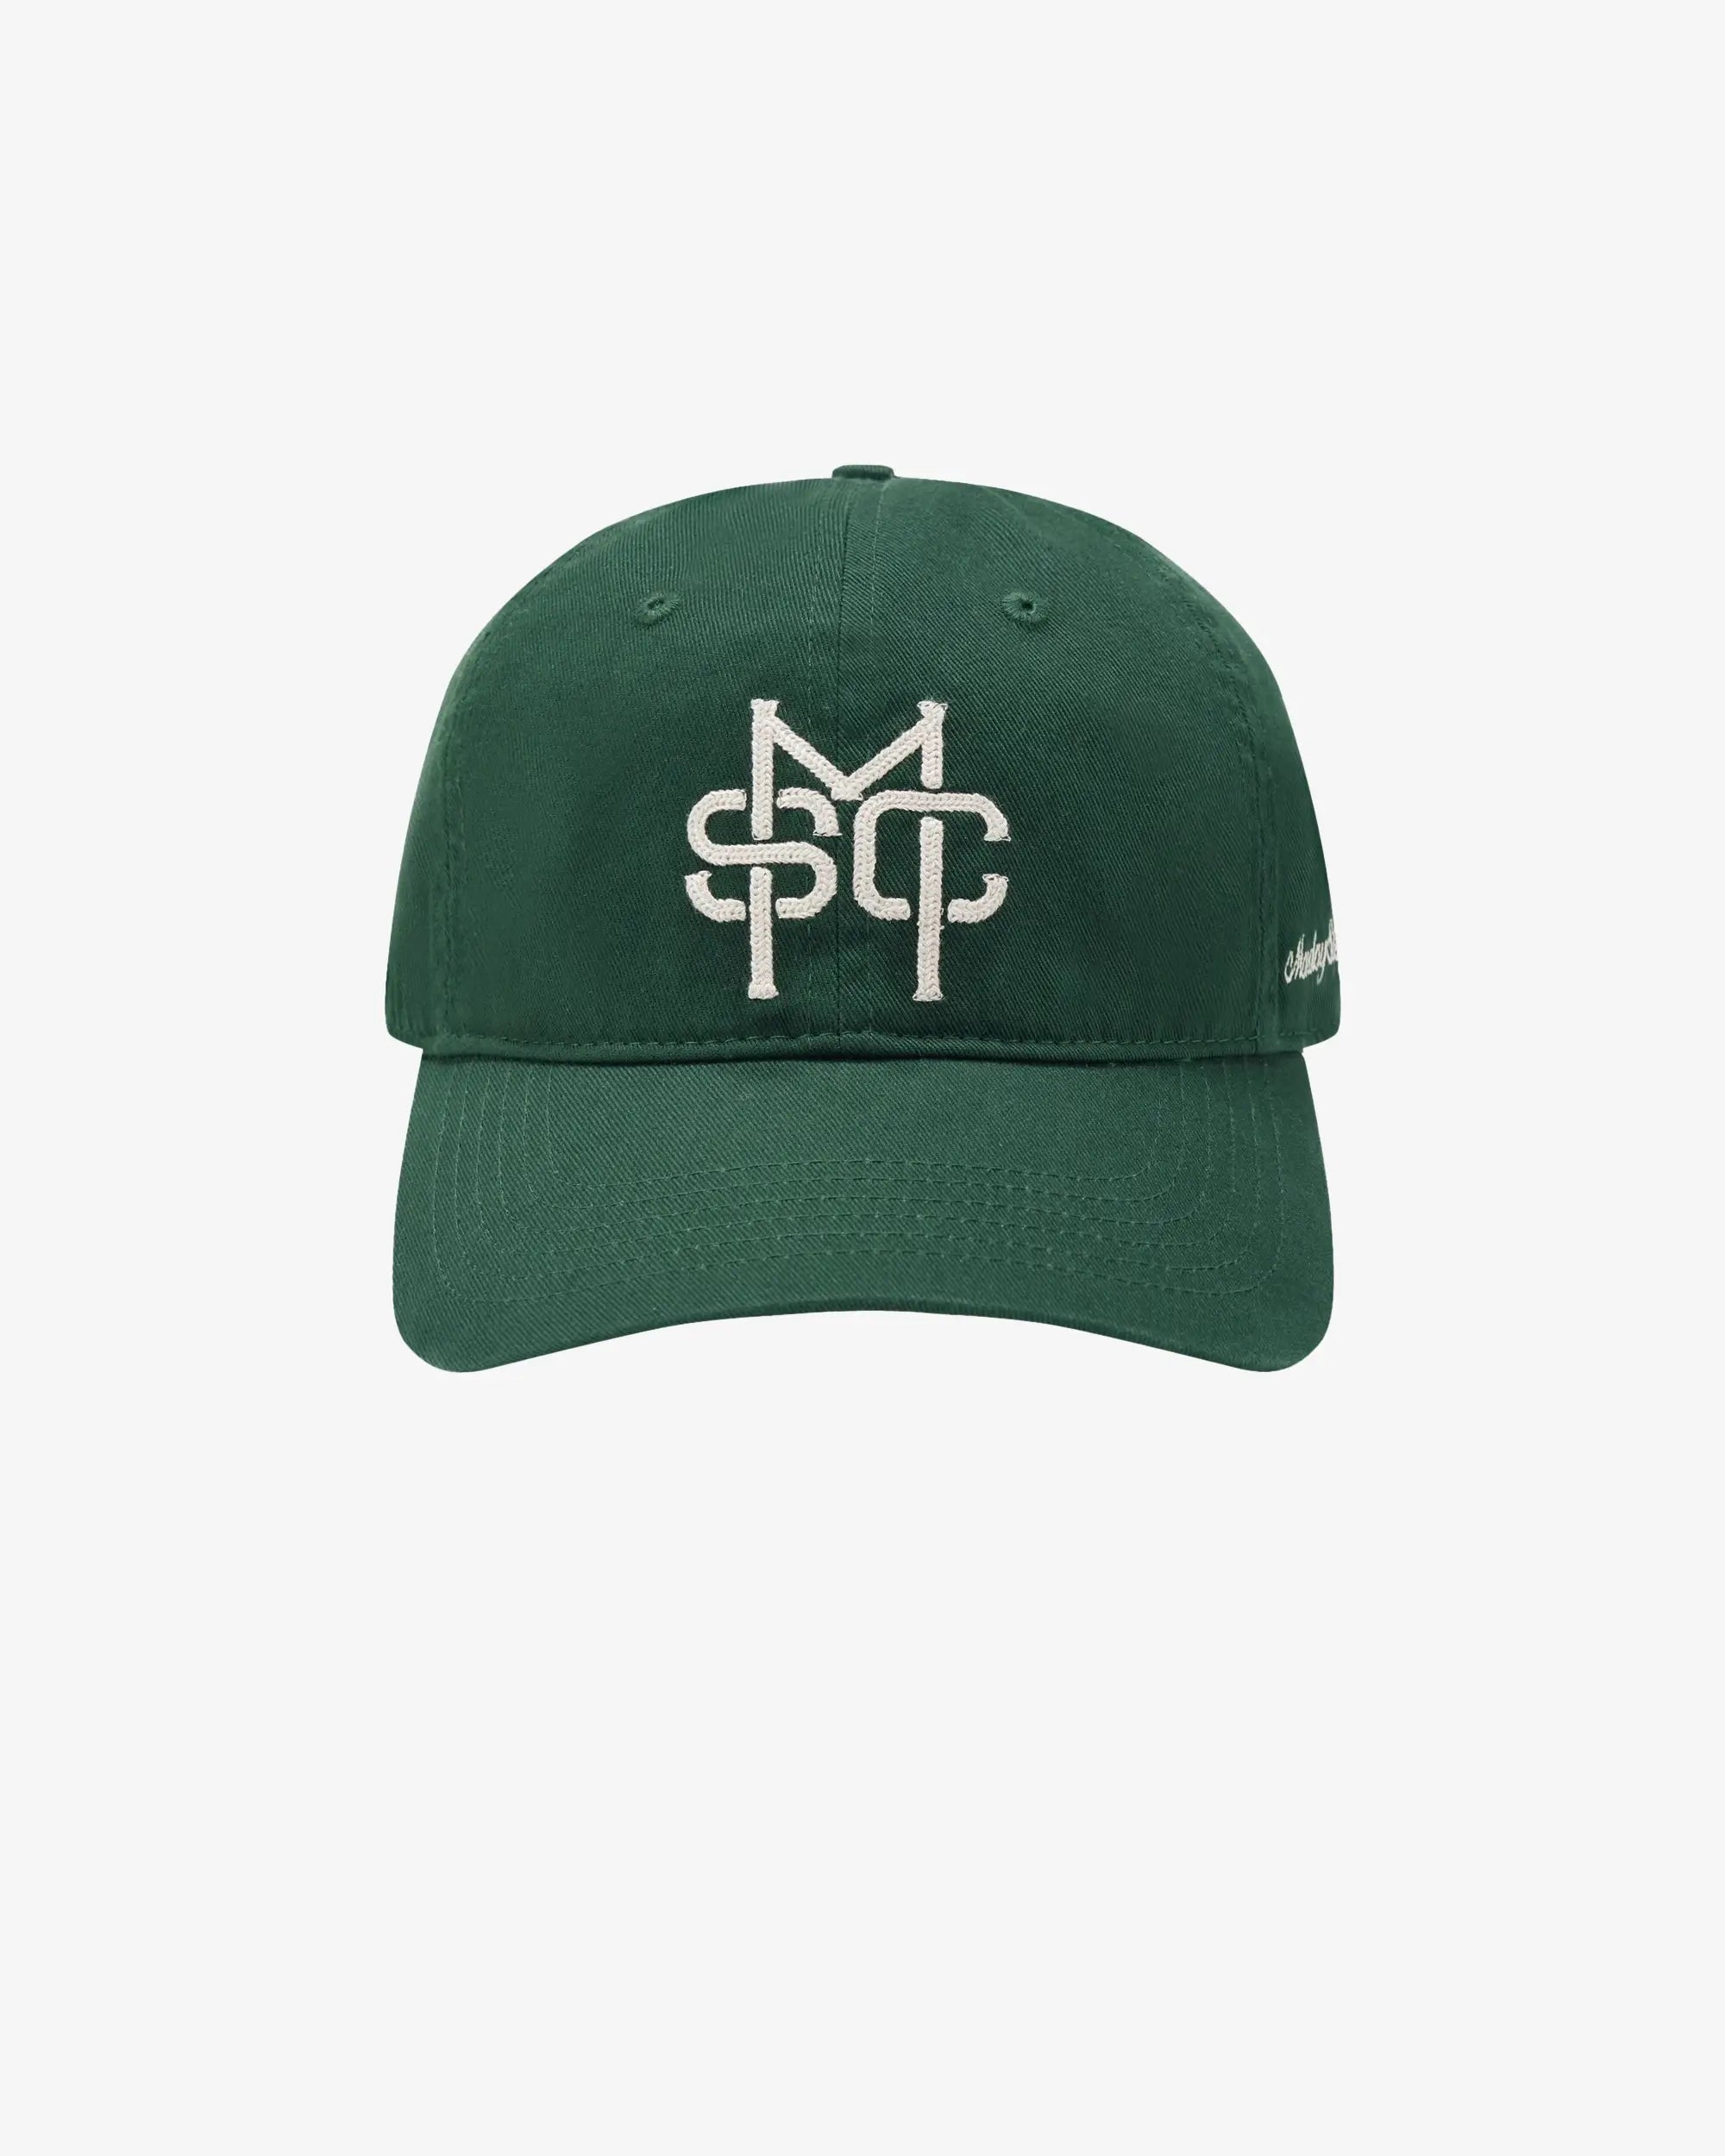 Monday Sleeping Club Initials Embroidered Baseball Cap